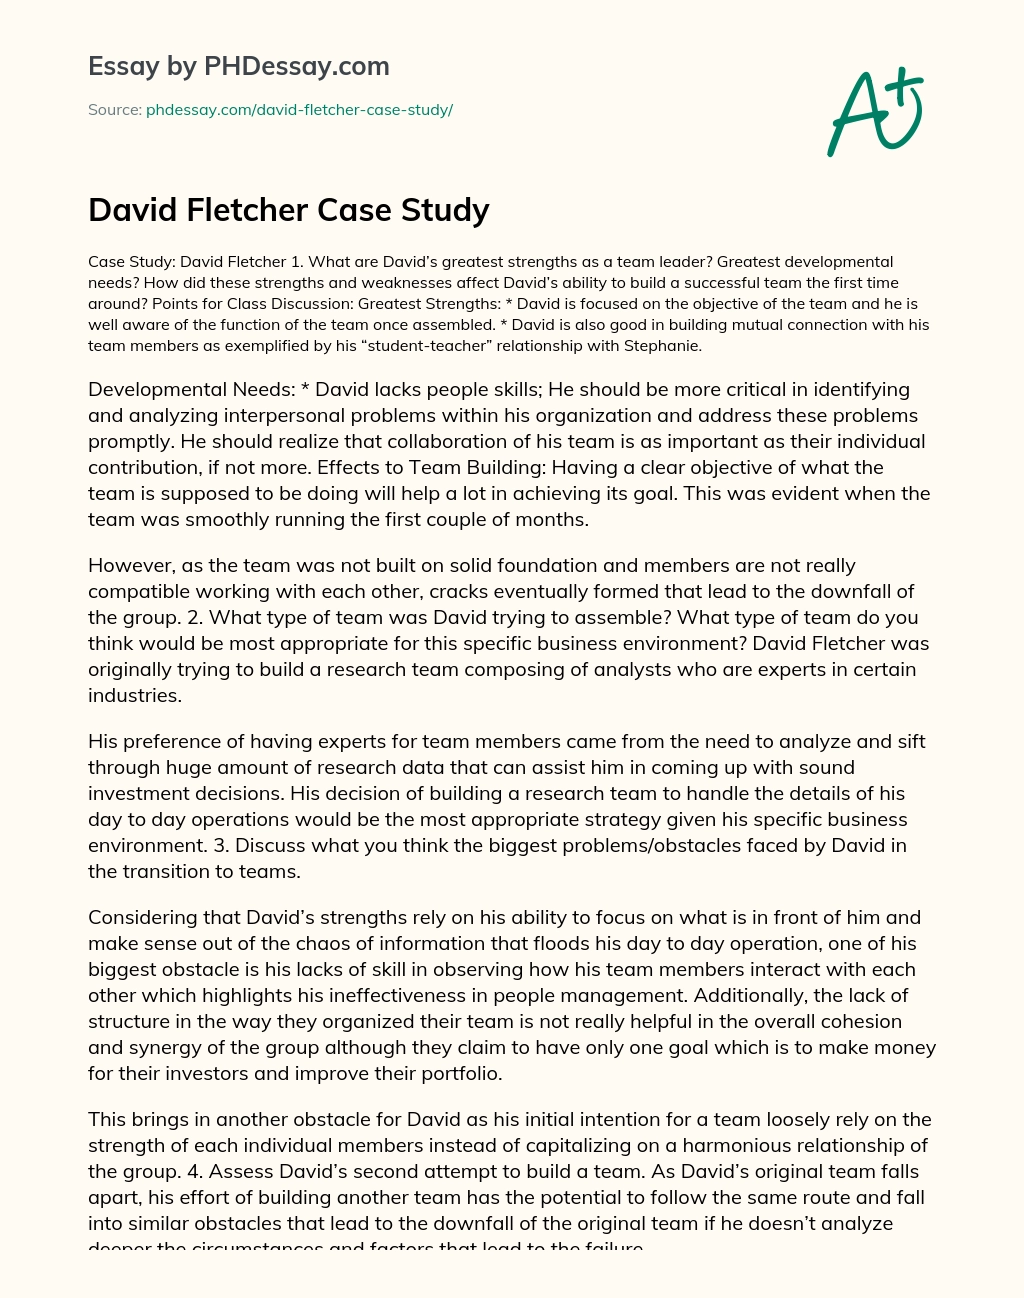 David Fletcher Case Study essay